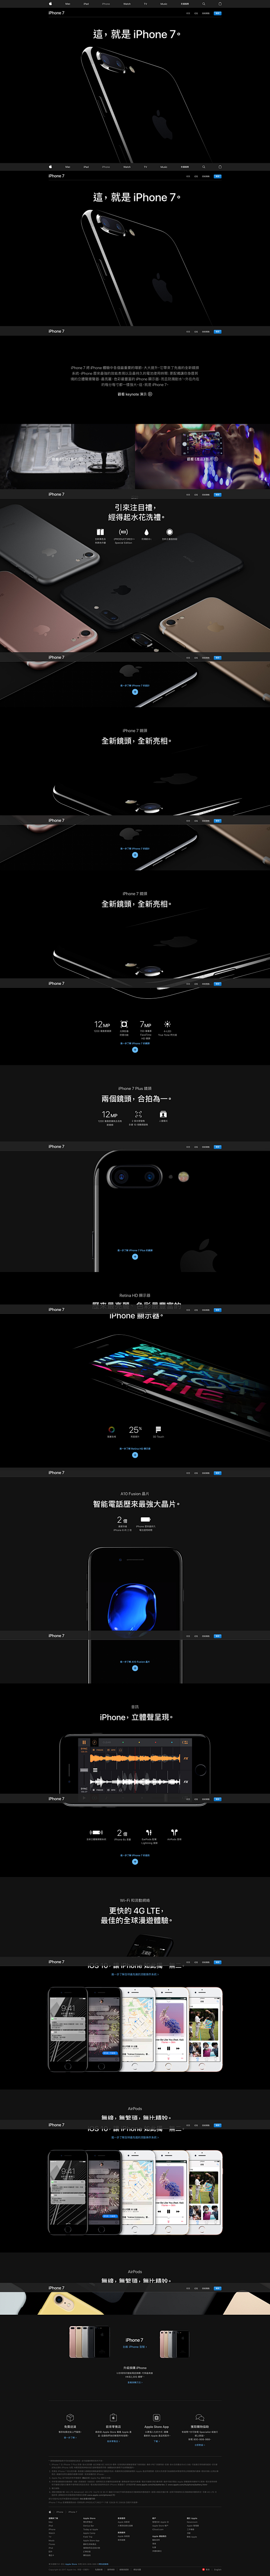 iPhone 7 - Apple (香港...